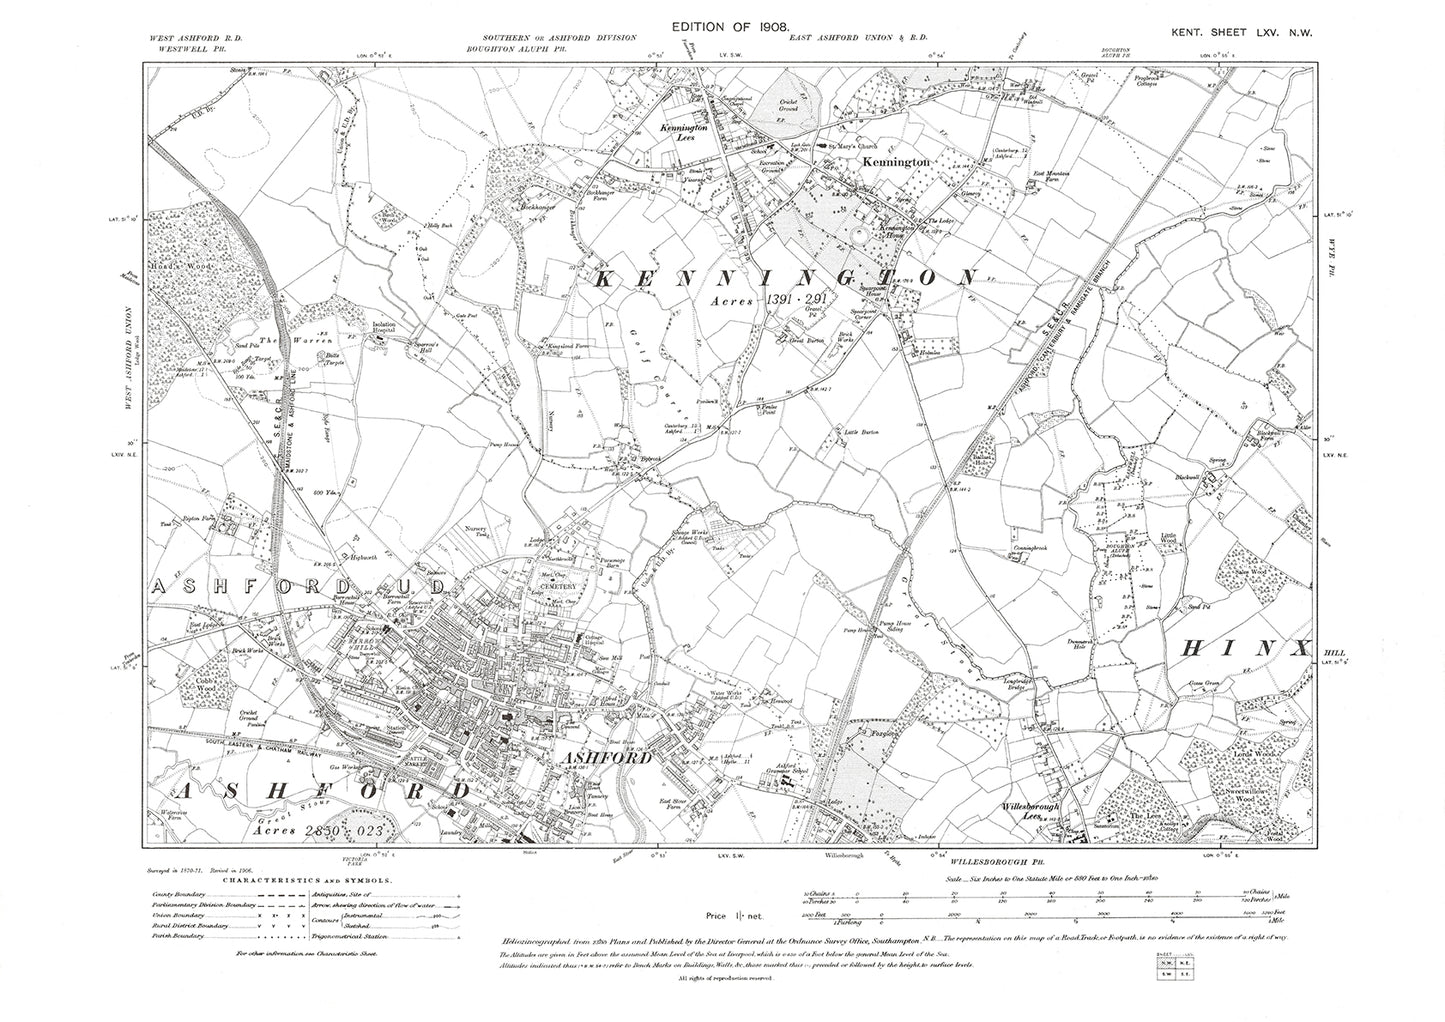 Ashford, Kennington, Hinxhill, old map Kent 1908: 65NW